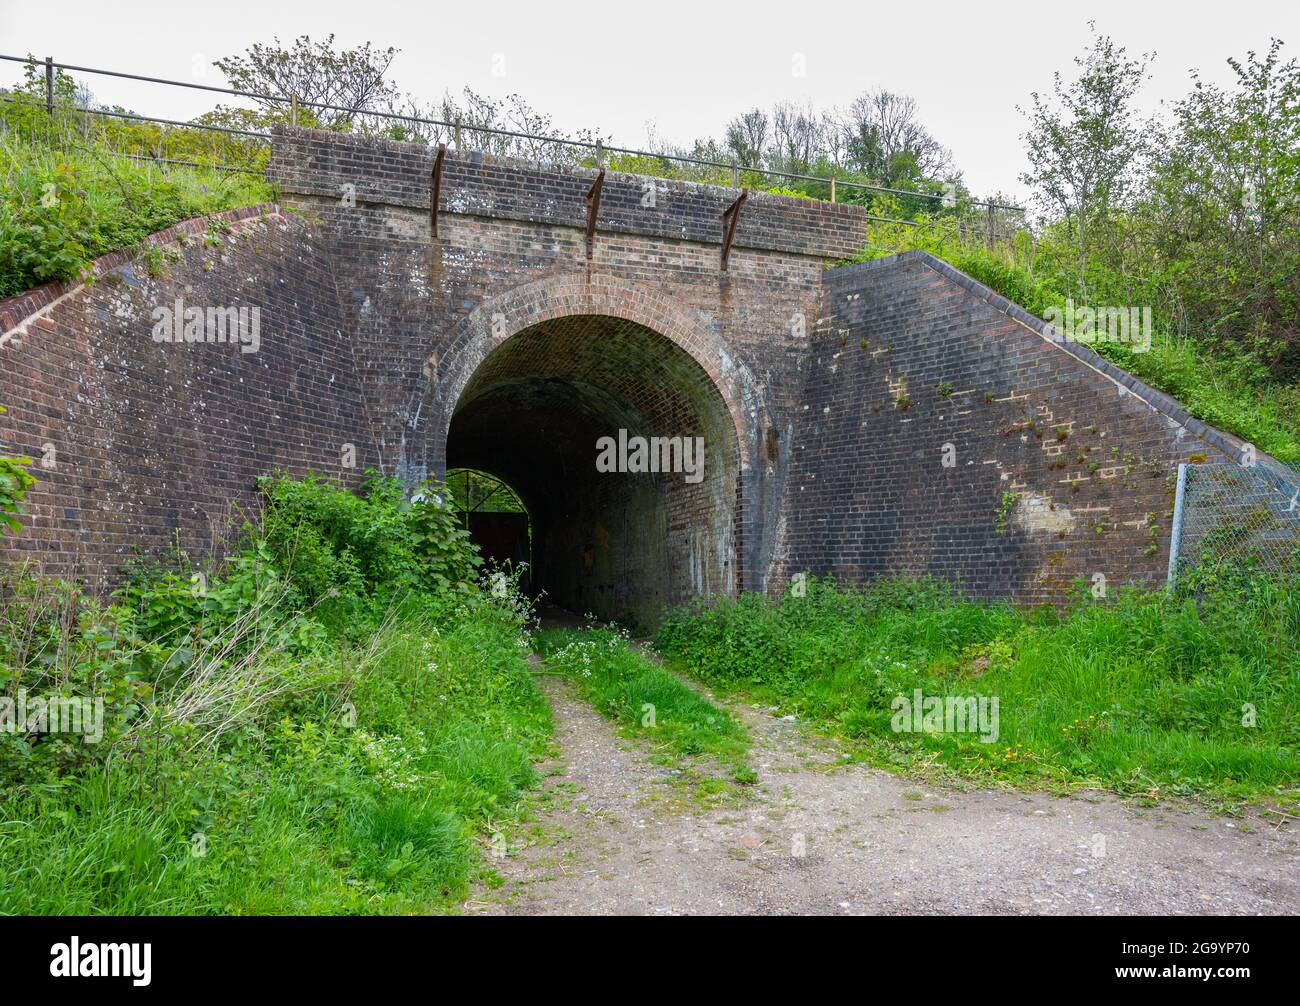 Old brick railway underline train bridge in Amberley, West Sussex, England, UK. Stock Photo